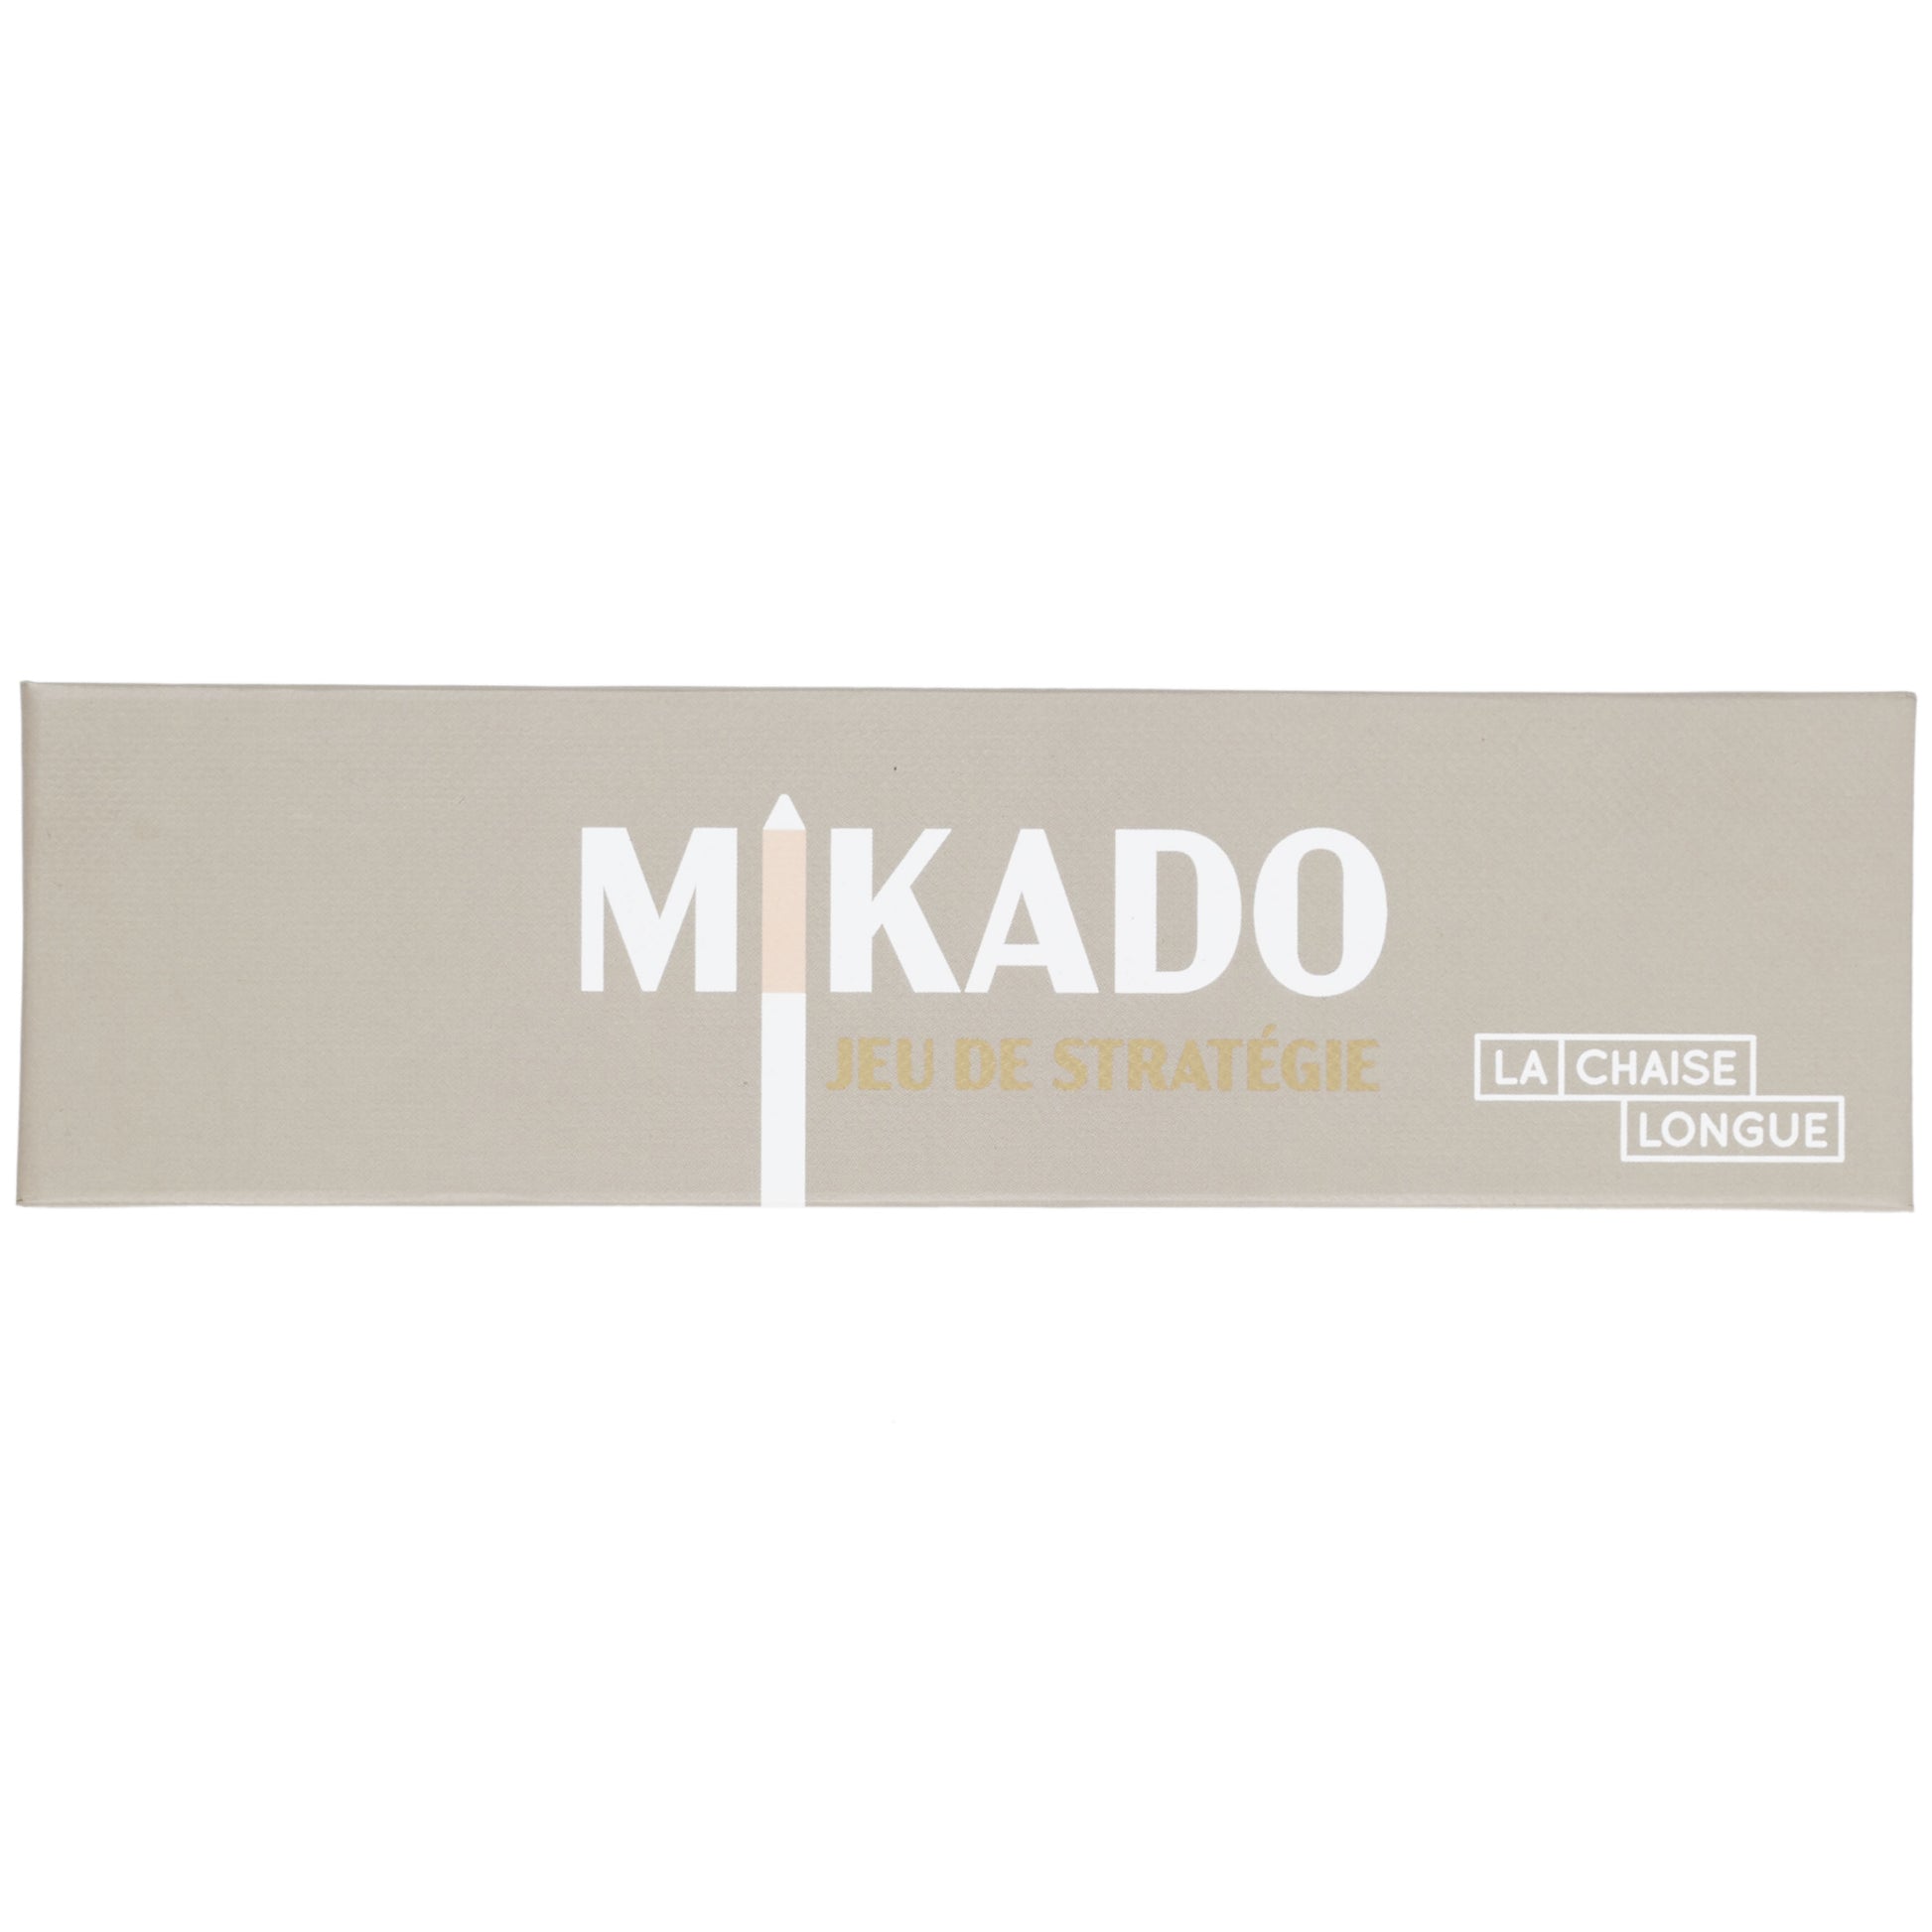 Règles du jeu du mikado